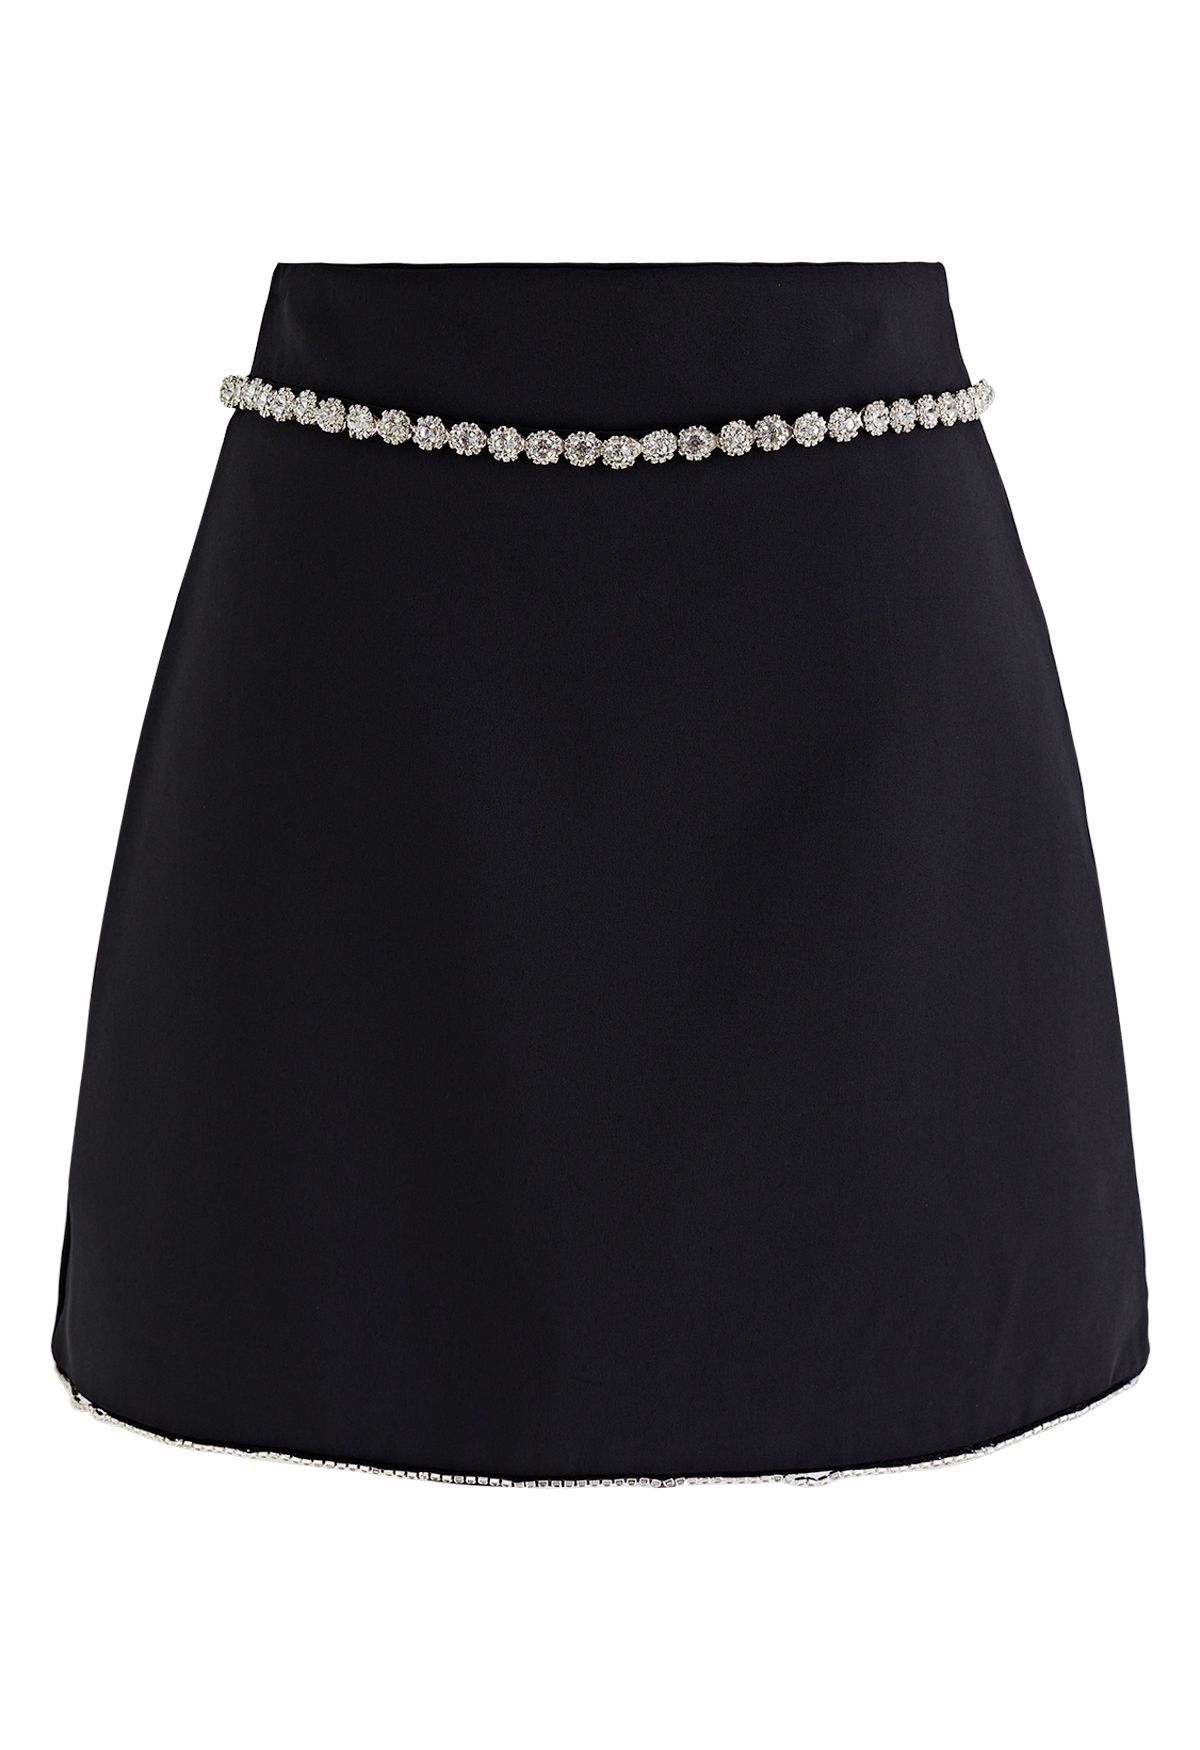 Dazzling Diamond Solid Color Mini Bud Skirt in Black | Chicwish